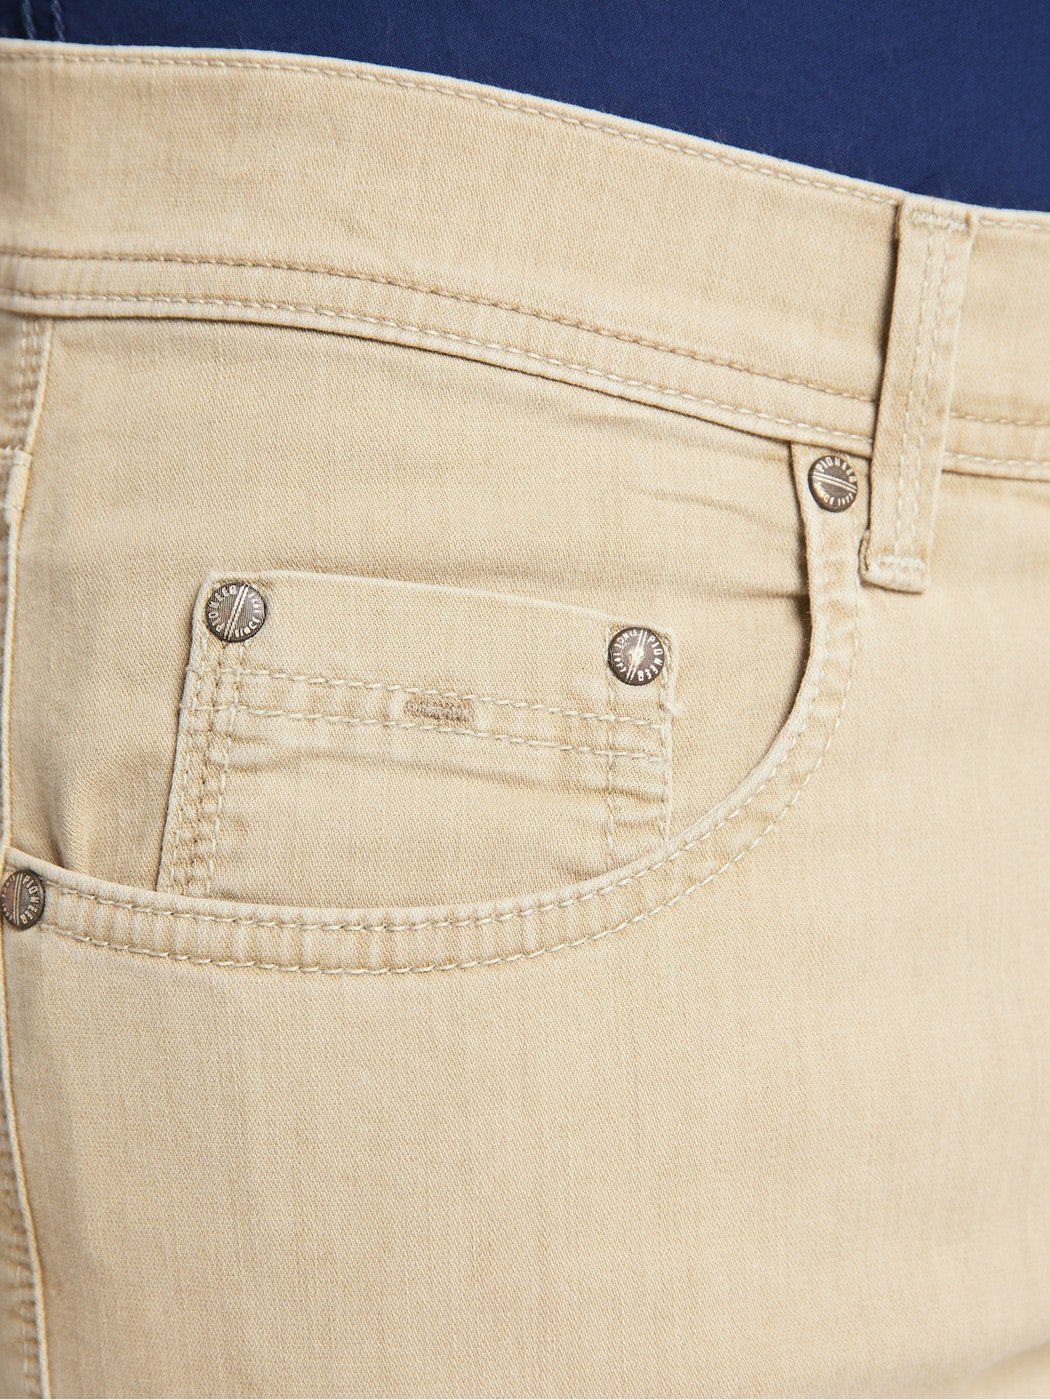 Jeans 5-Pocket-Jeans Authentic 9516.05 Pioneer MEGAFLEX RANDO PIONEER 1680 beige light